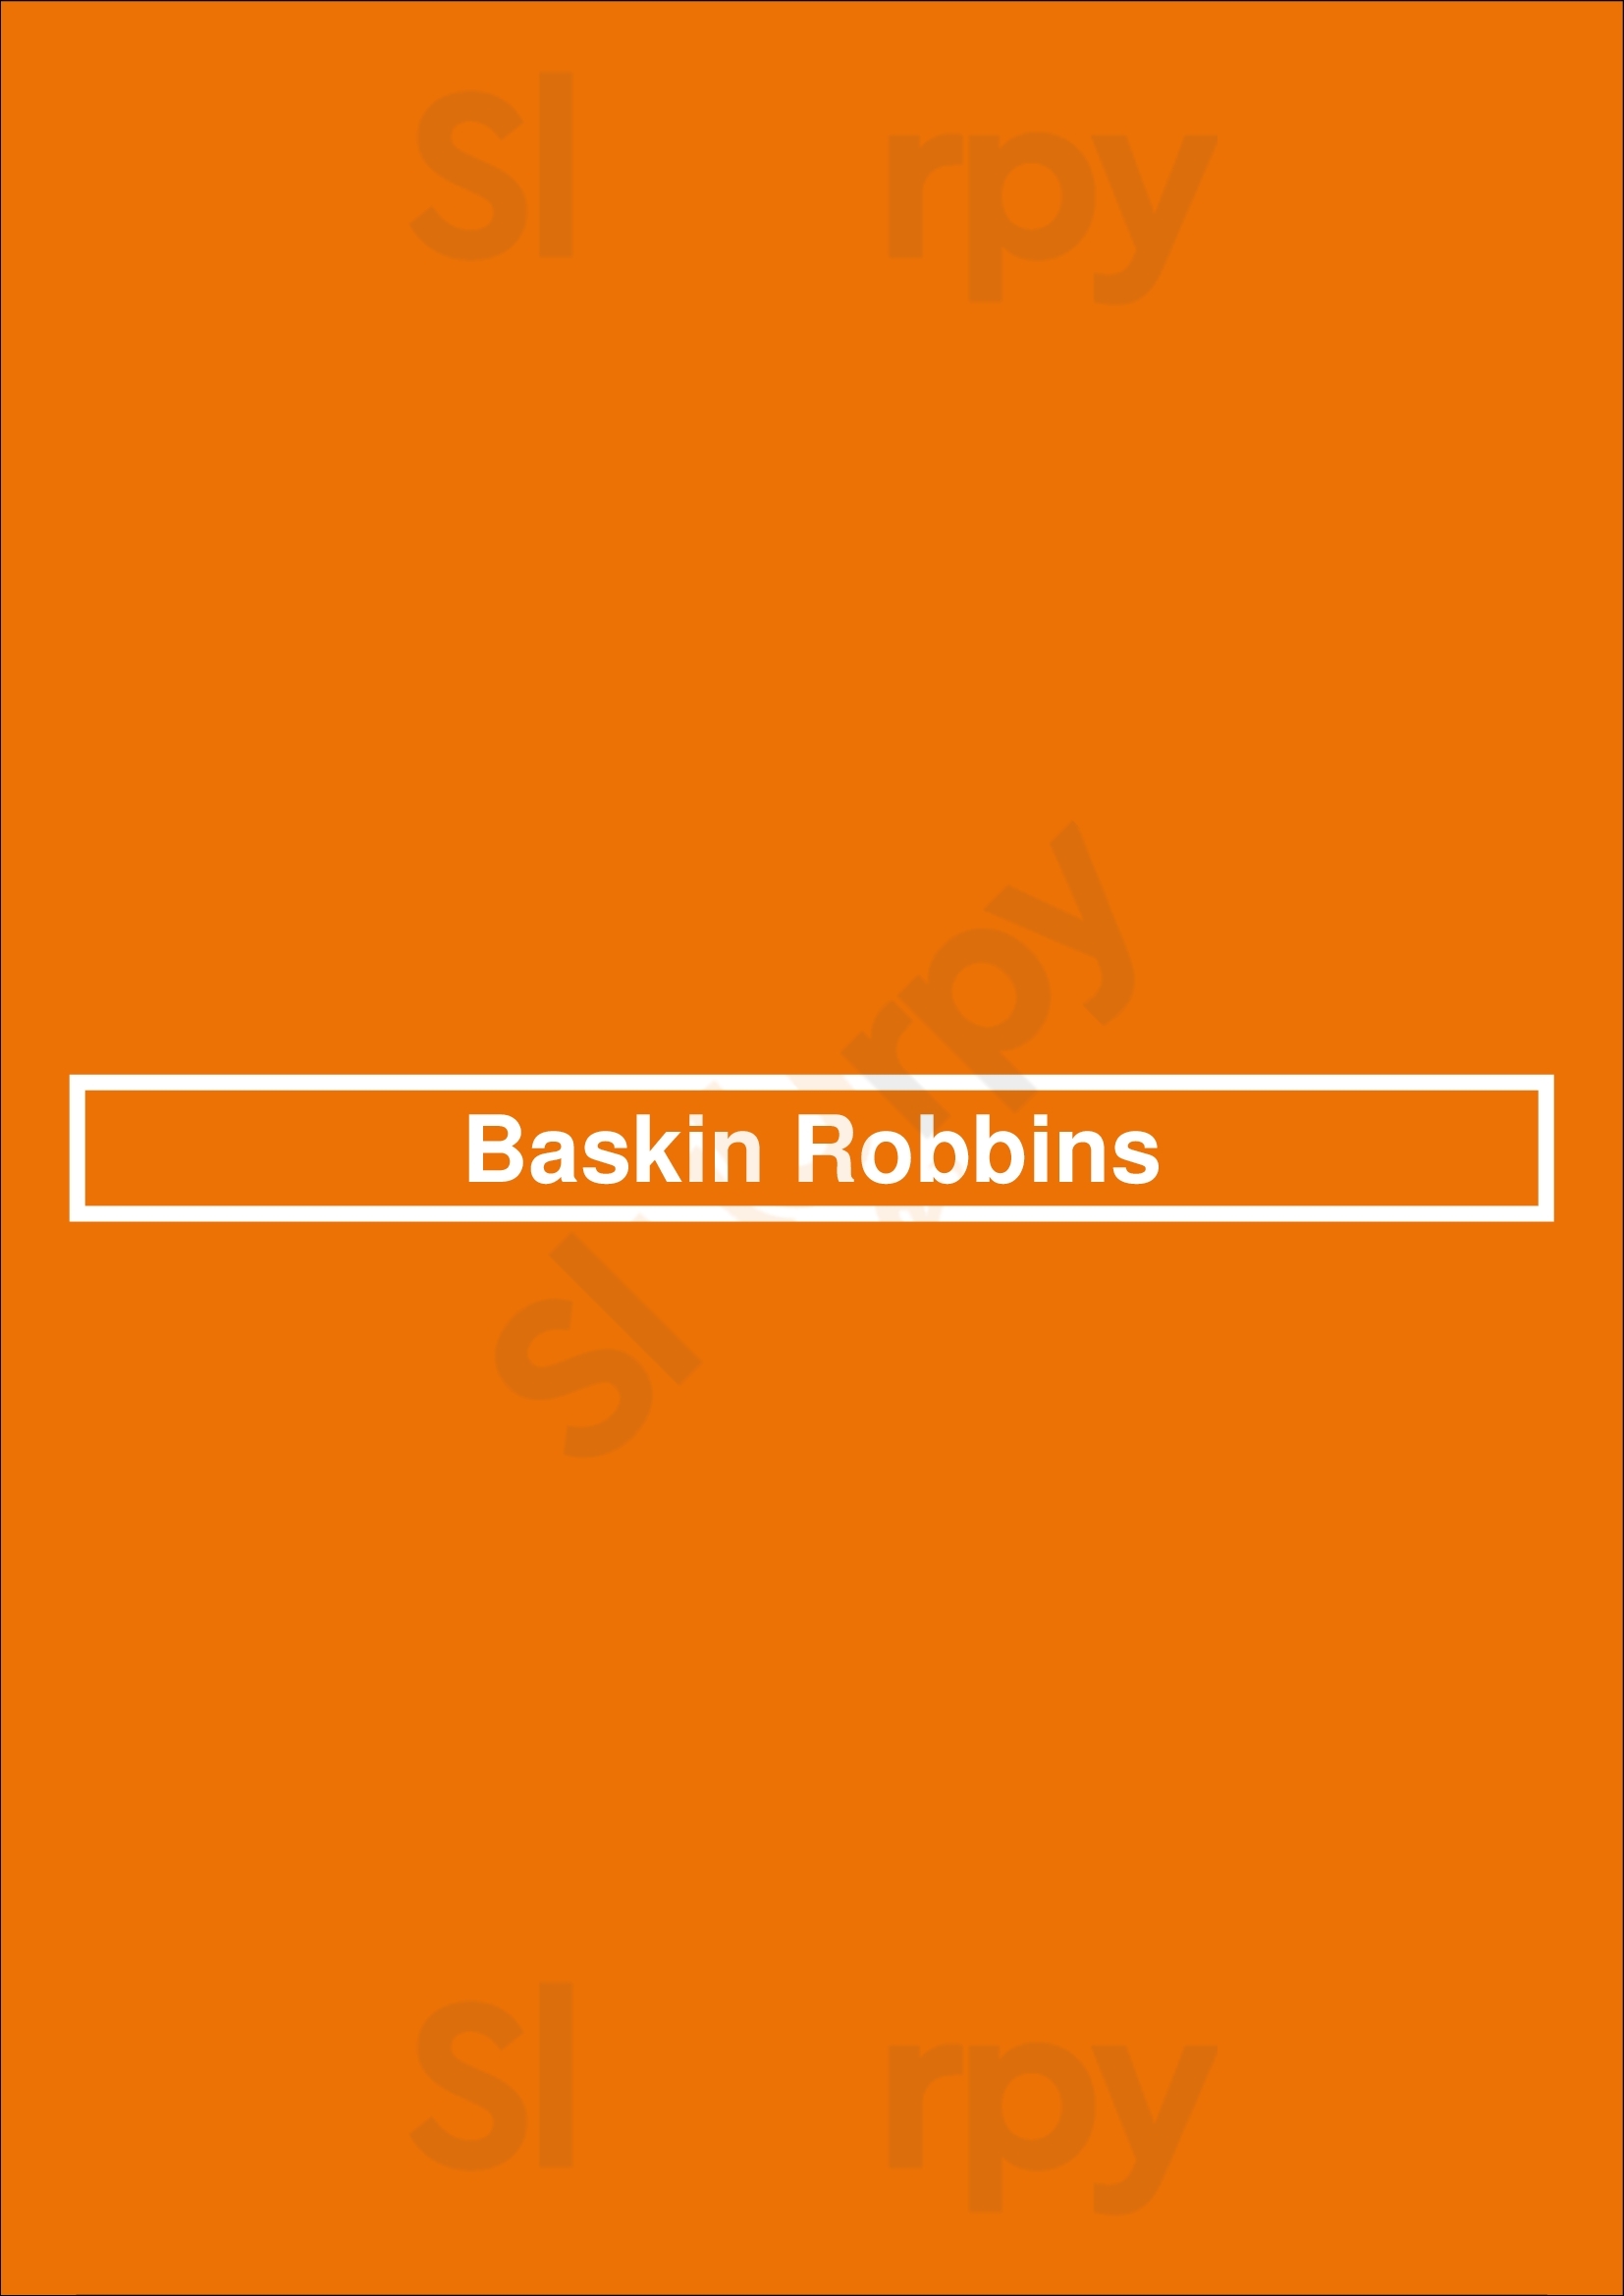 Baskin-robbins Chicago Menu - 1